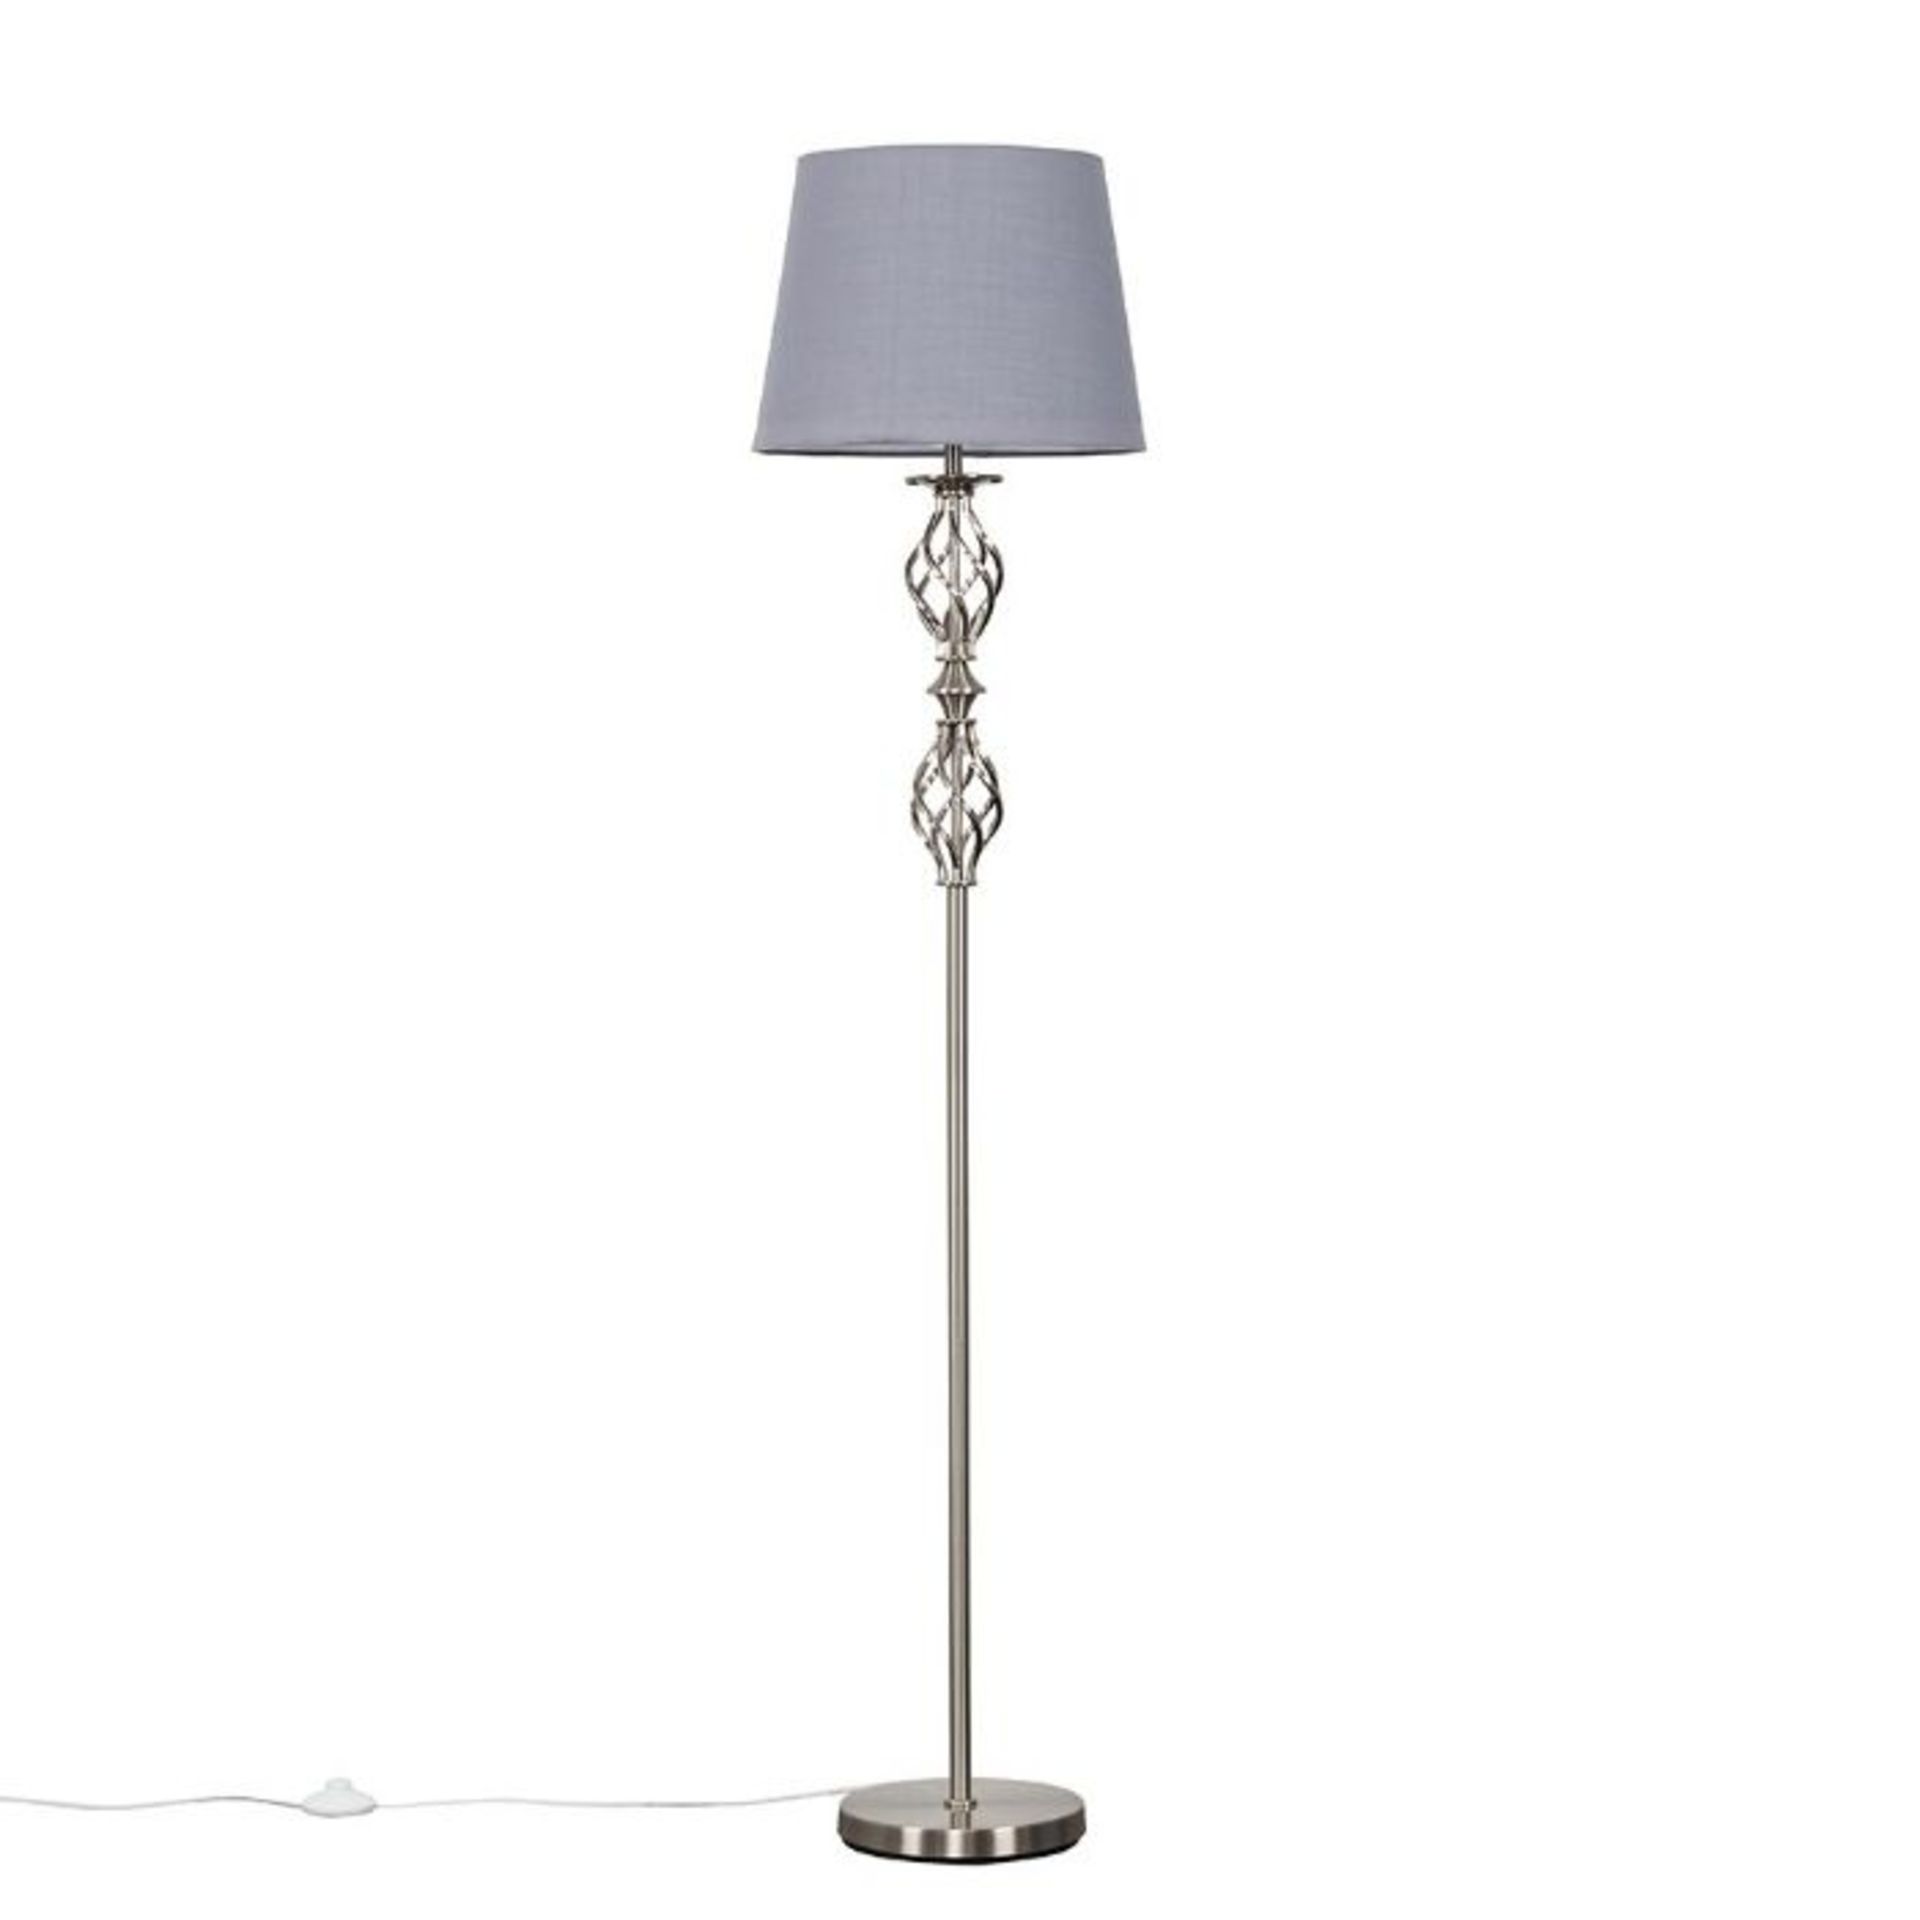 ClassicLiving, Gilliland 140cm Floor Lamp (SATIN NICKEL BASE & GREY SHADE) - RRP £61.99 (